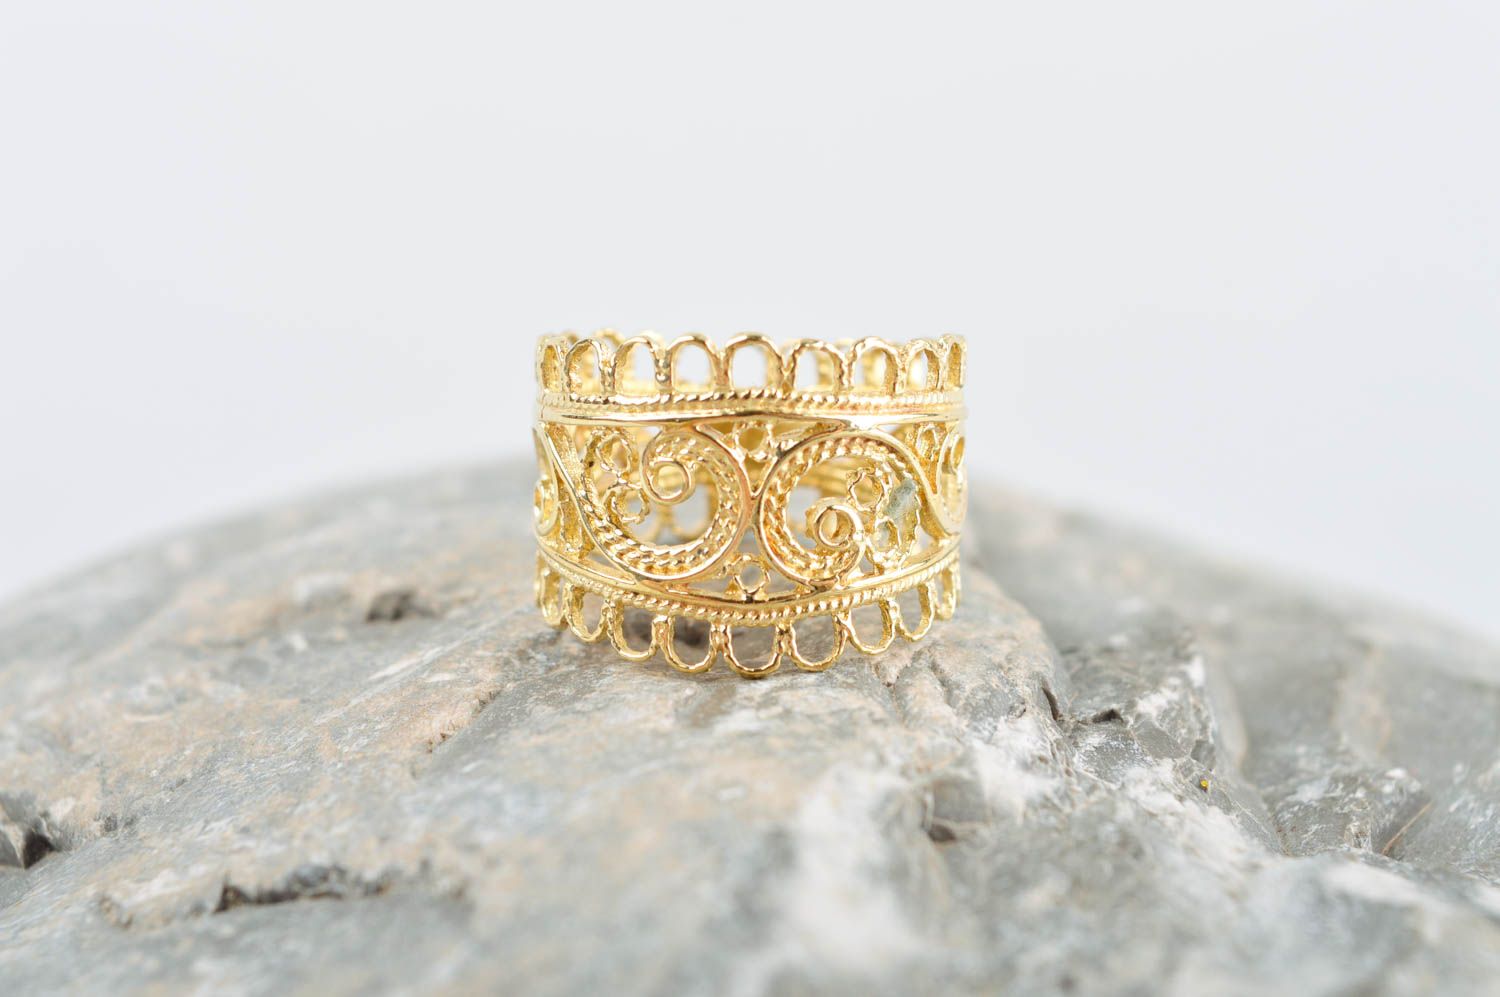 Unusual handmade metal ring brass ring metal craft jewelry designs for girls photo 1